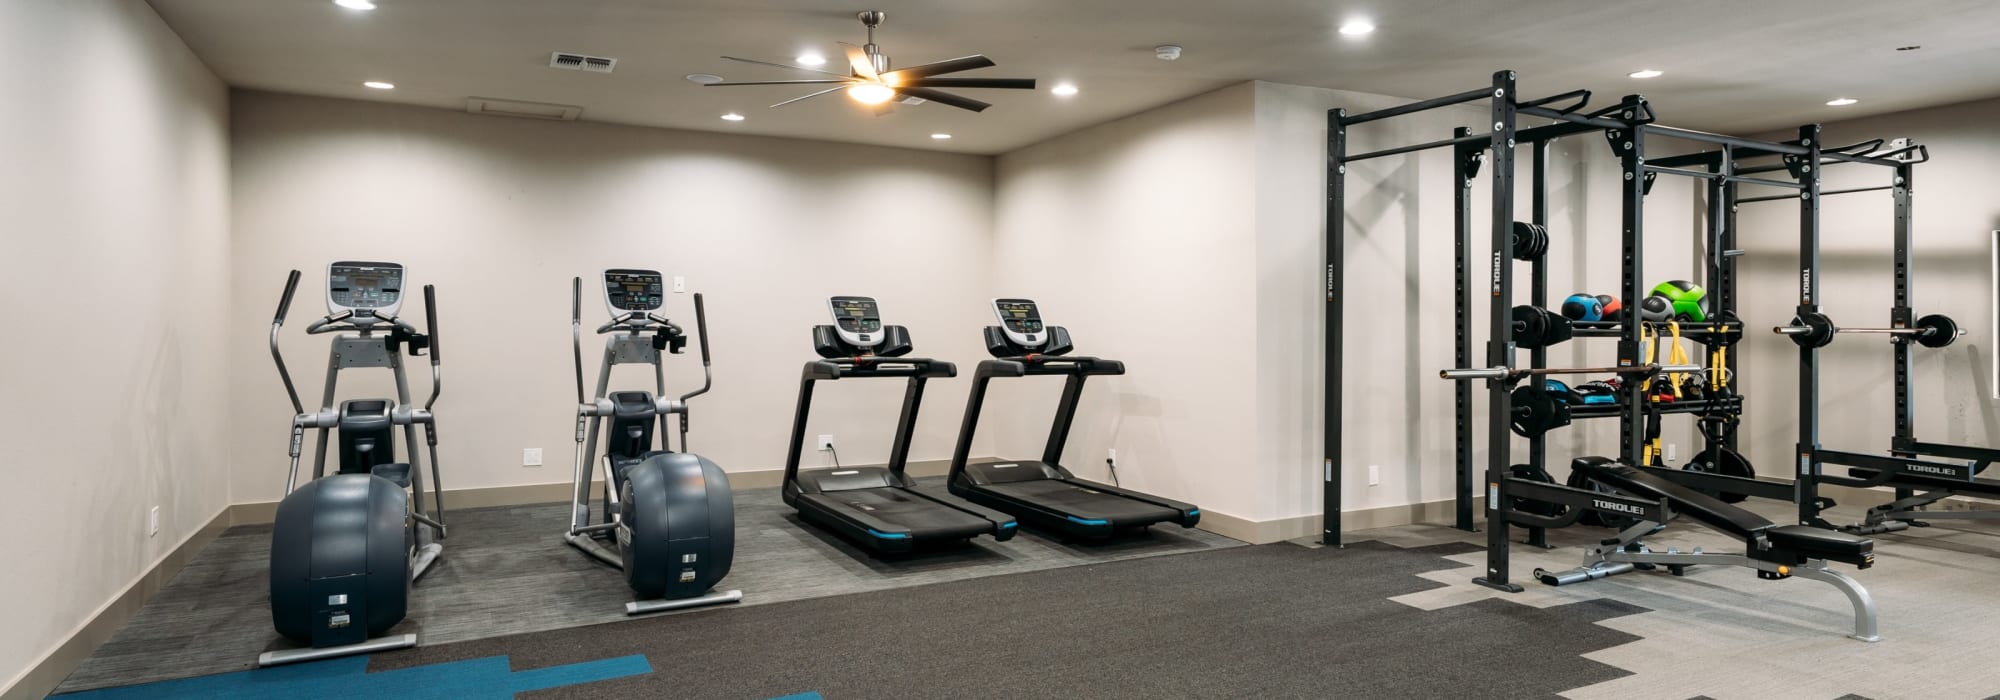 Fitness center at Park Vista Apartments in San Antonio, Texas